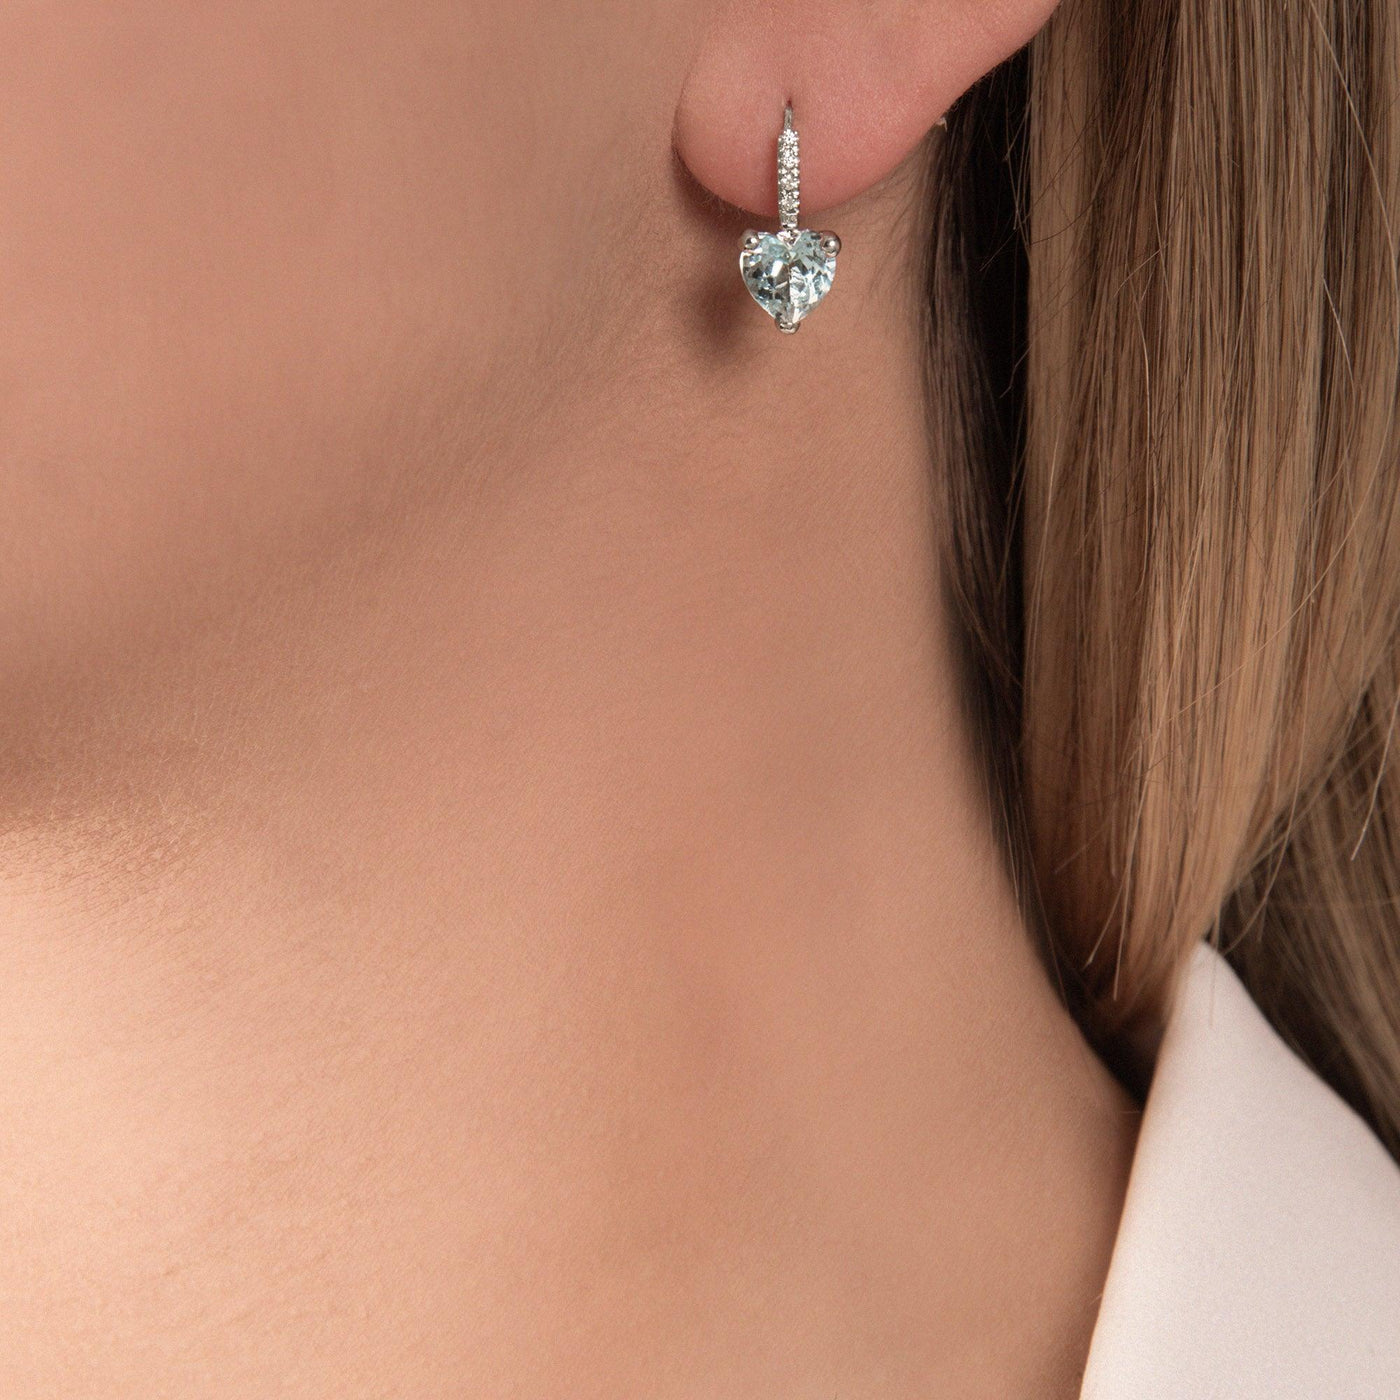 Aquamarine Heart Earrings in 2 sizes - Moregola Fine Jewelry